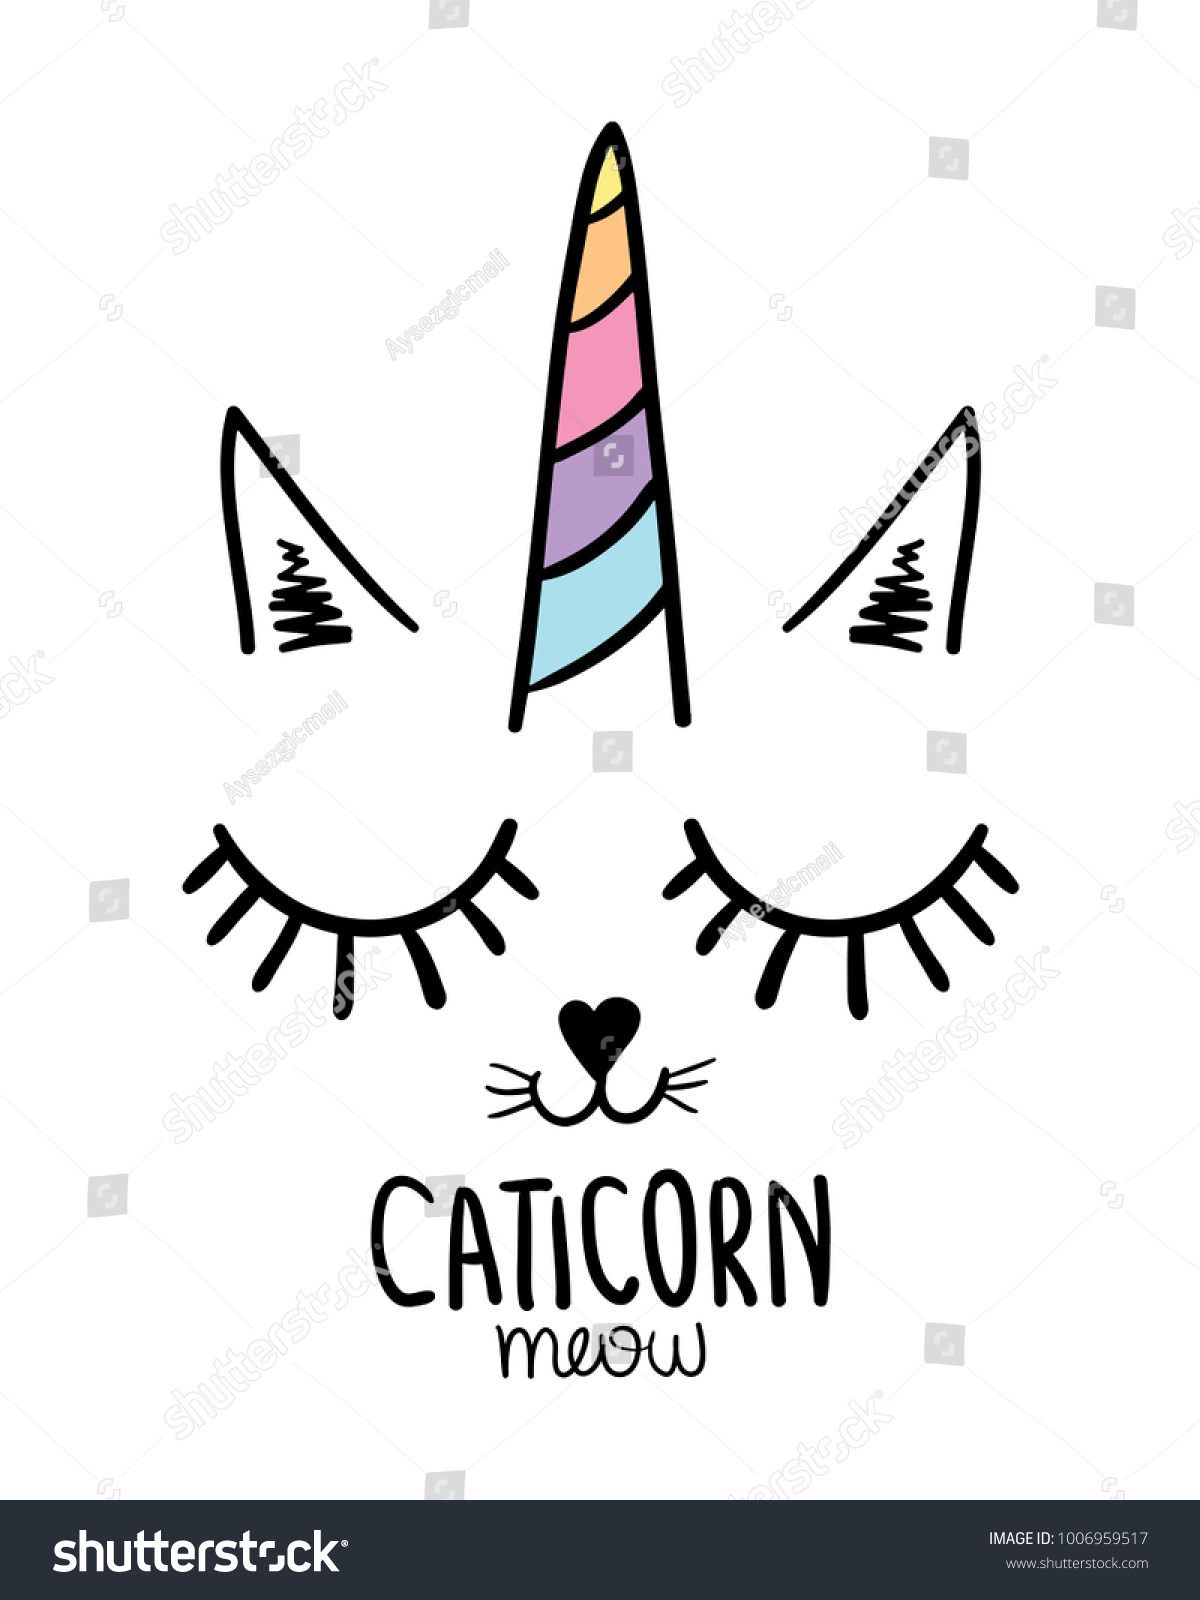 SVG of Cat unicorn / Textile graphic t shirt print / Vector illustration design svg